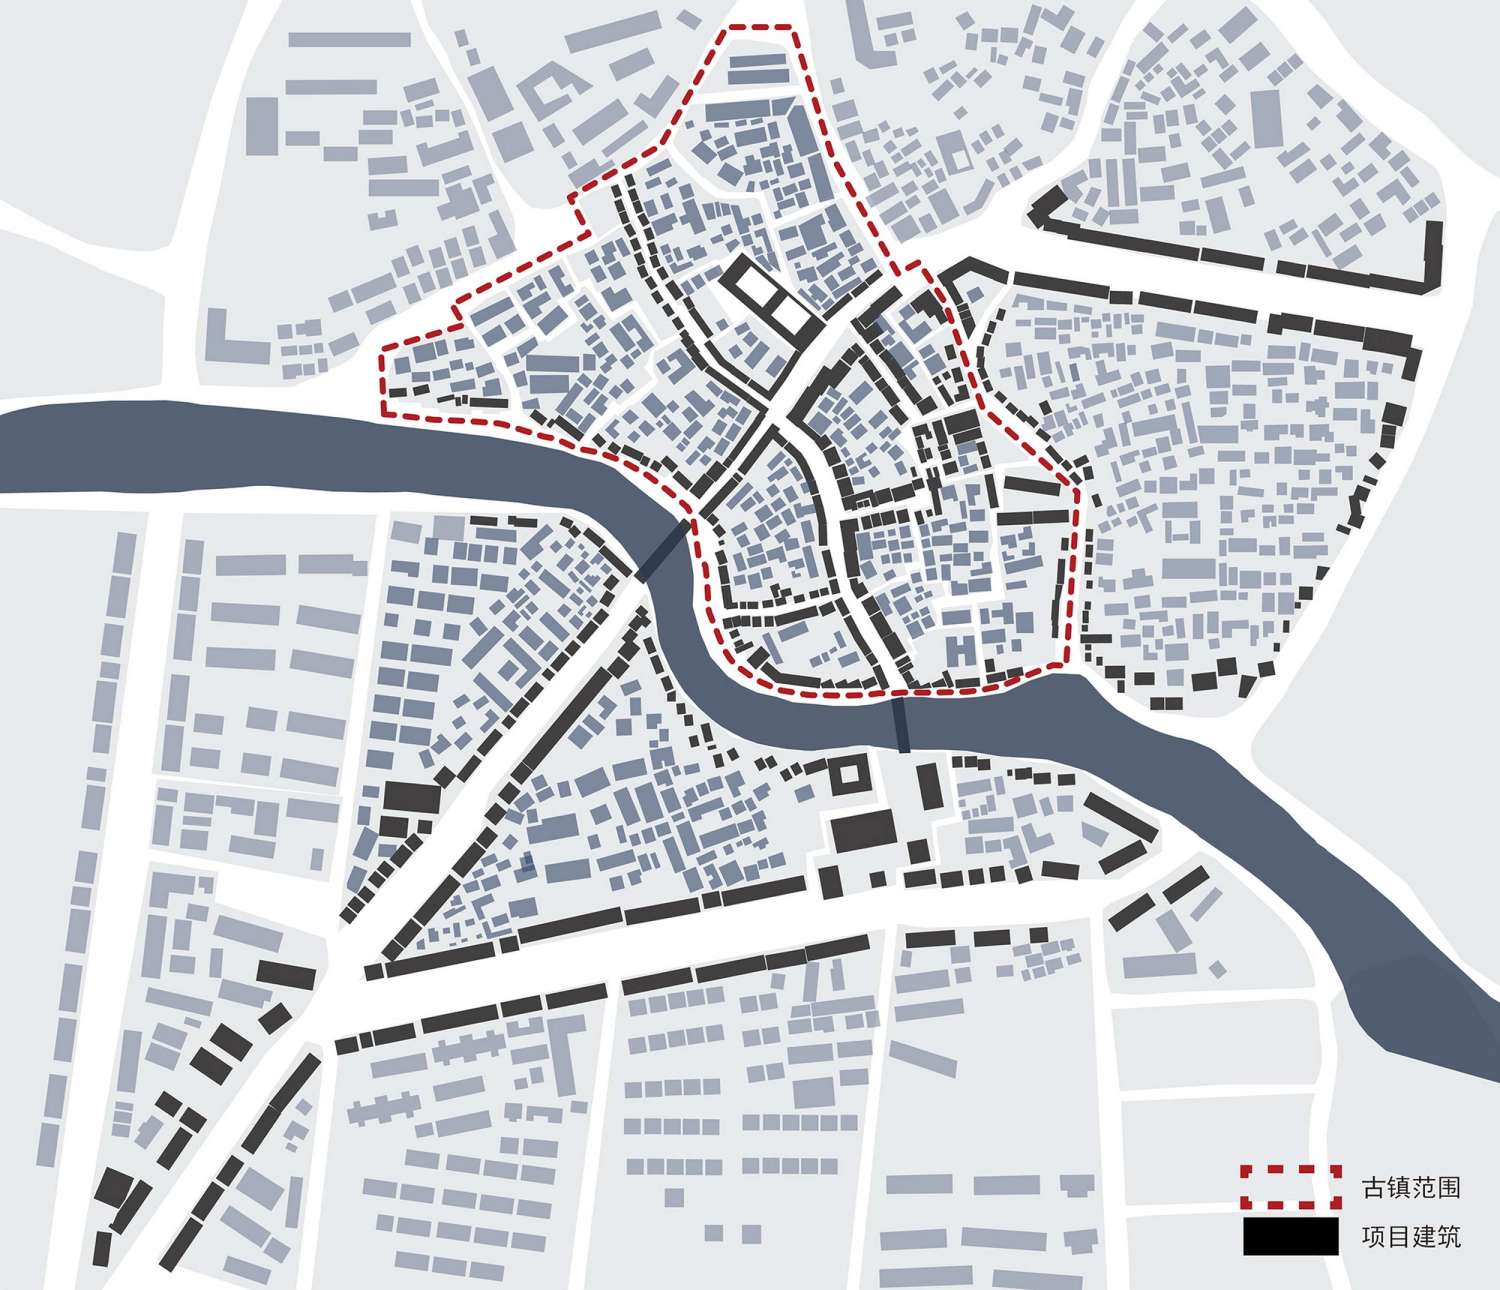 01：古镇更新总平面图 Ancient town renewal master plan.jpg